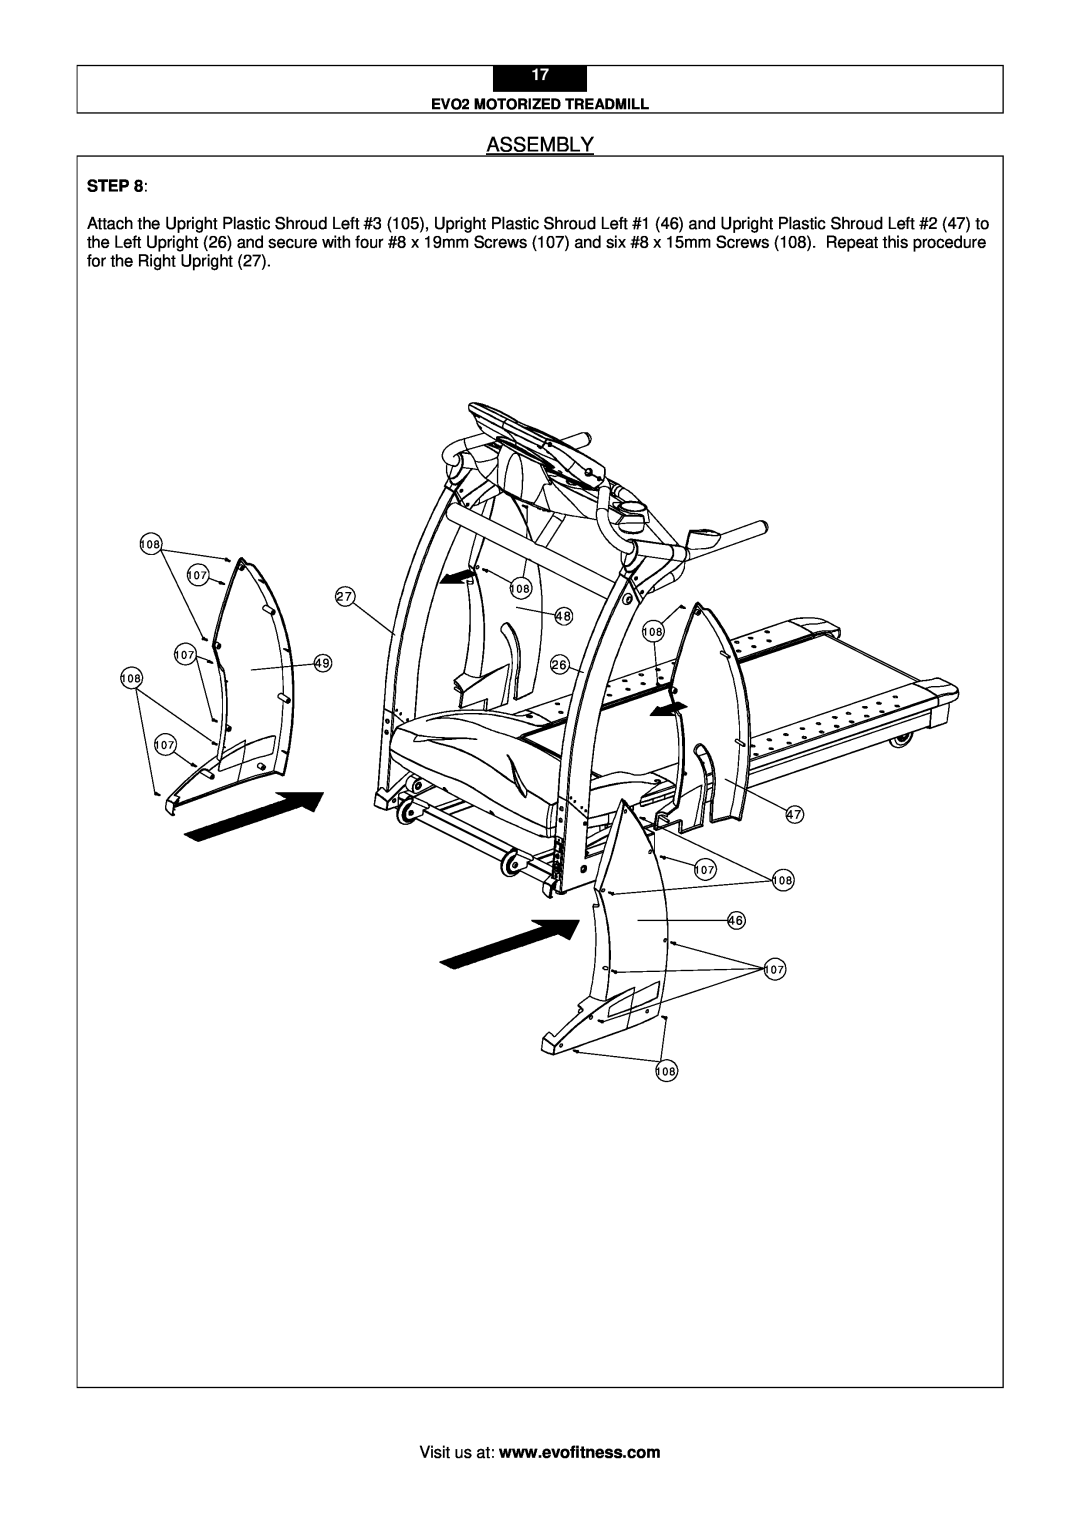 Evo Fitness user manual Assembly, EVO2 MOTORIZED TREADMILL, 108 107 107, 107 108 